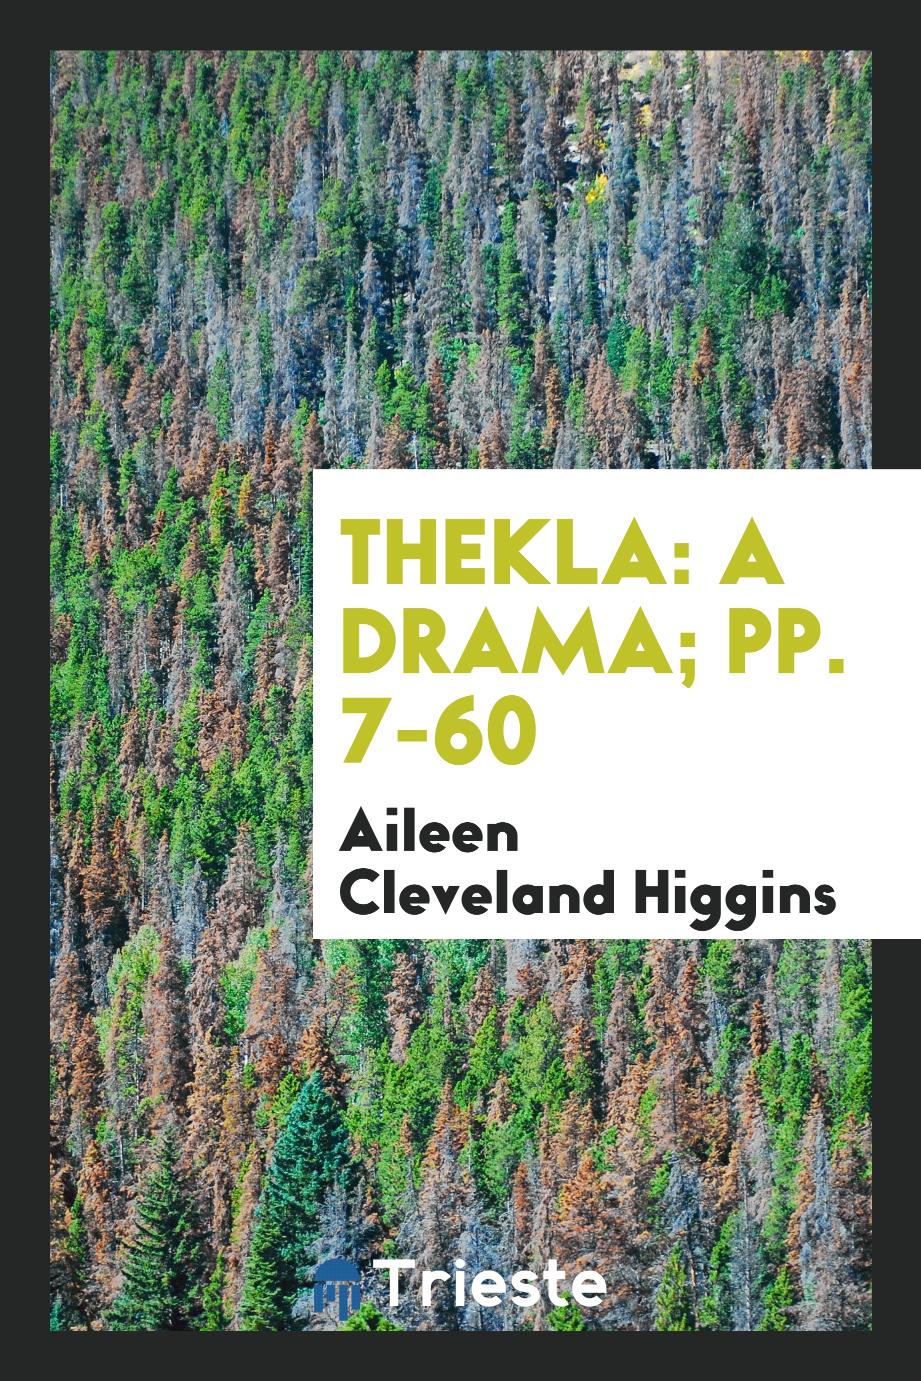 Thekla: A Drama; pp. 7-60